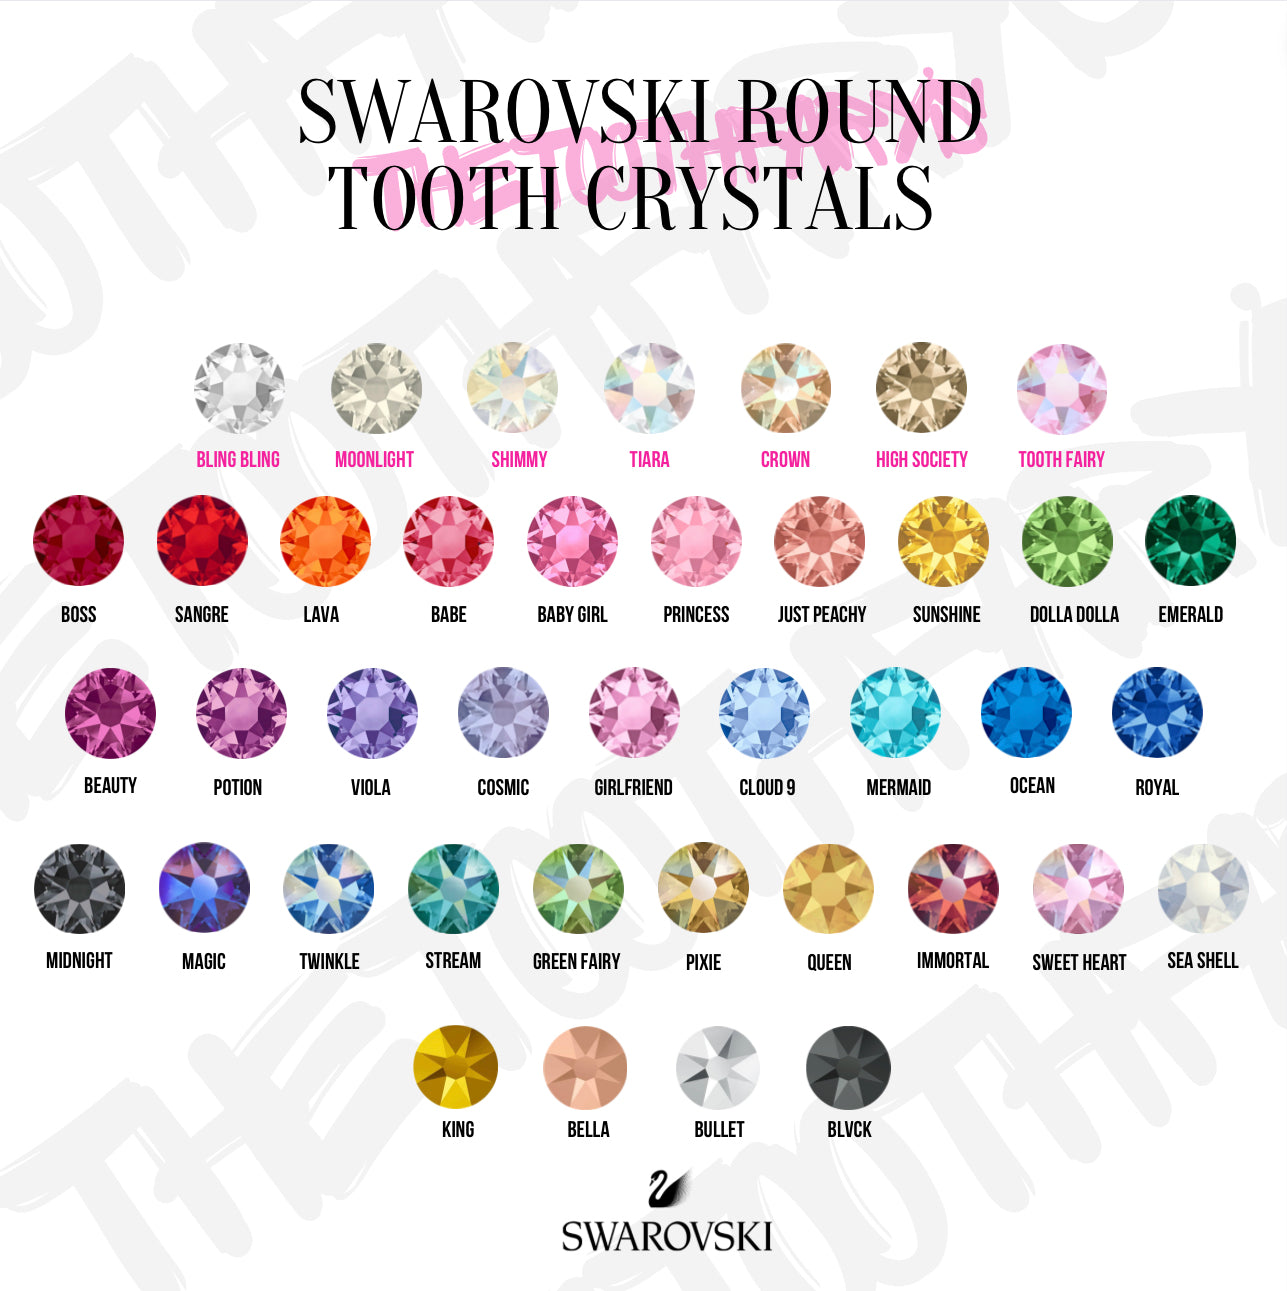 Swarovski Round Crystal Tooth Gems